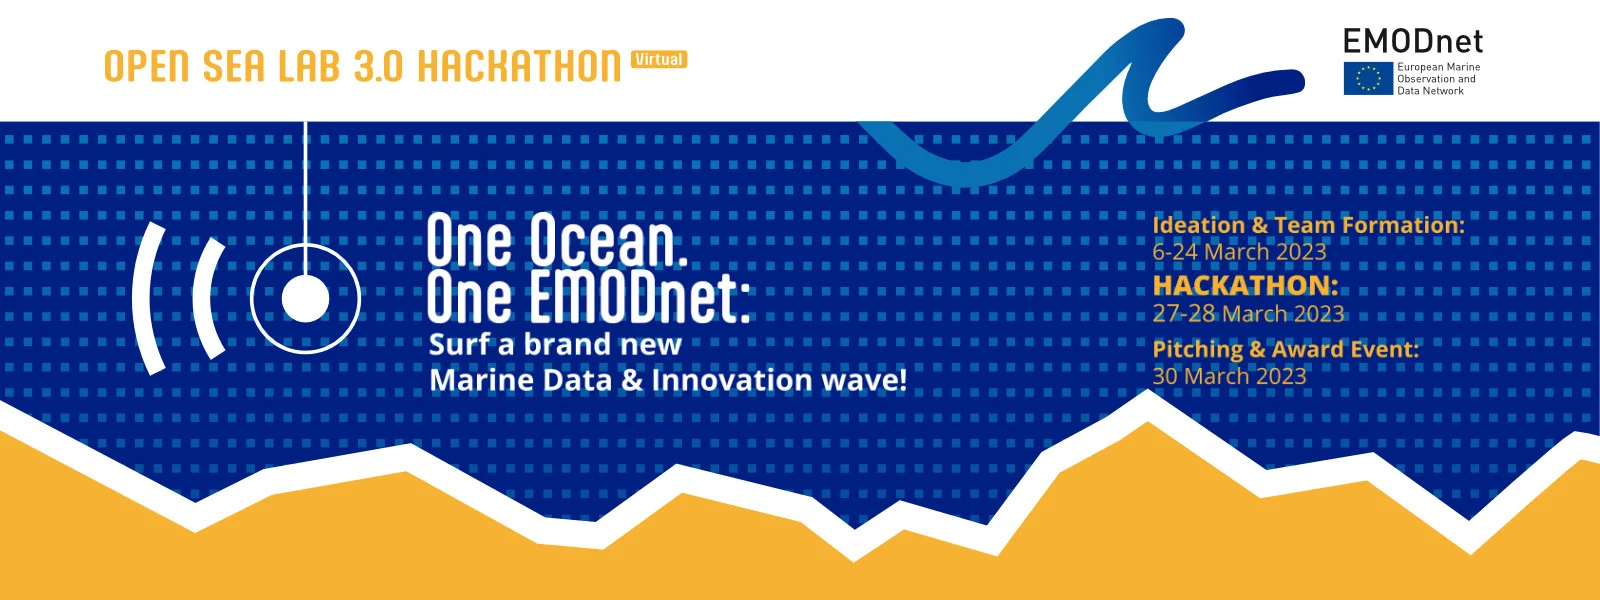 EMODnet Open Sea Lab 3.0 Hackathon